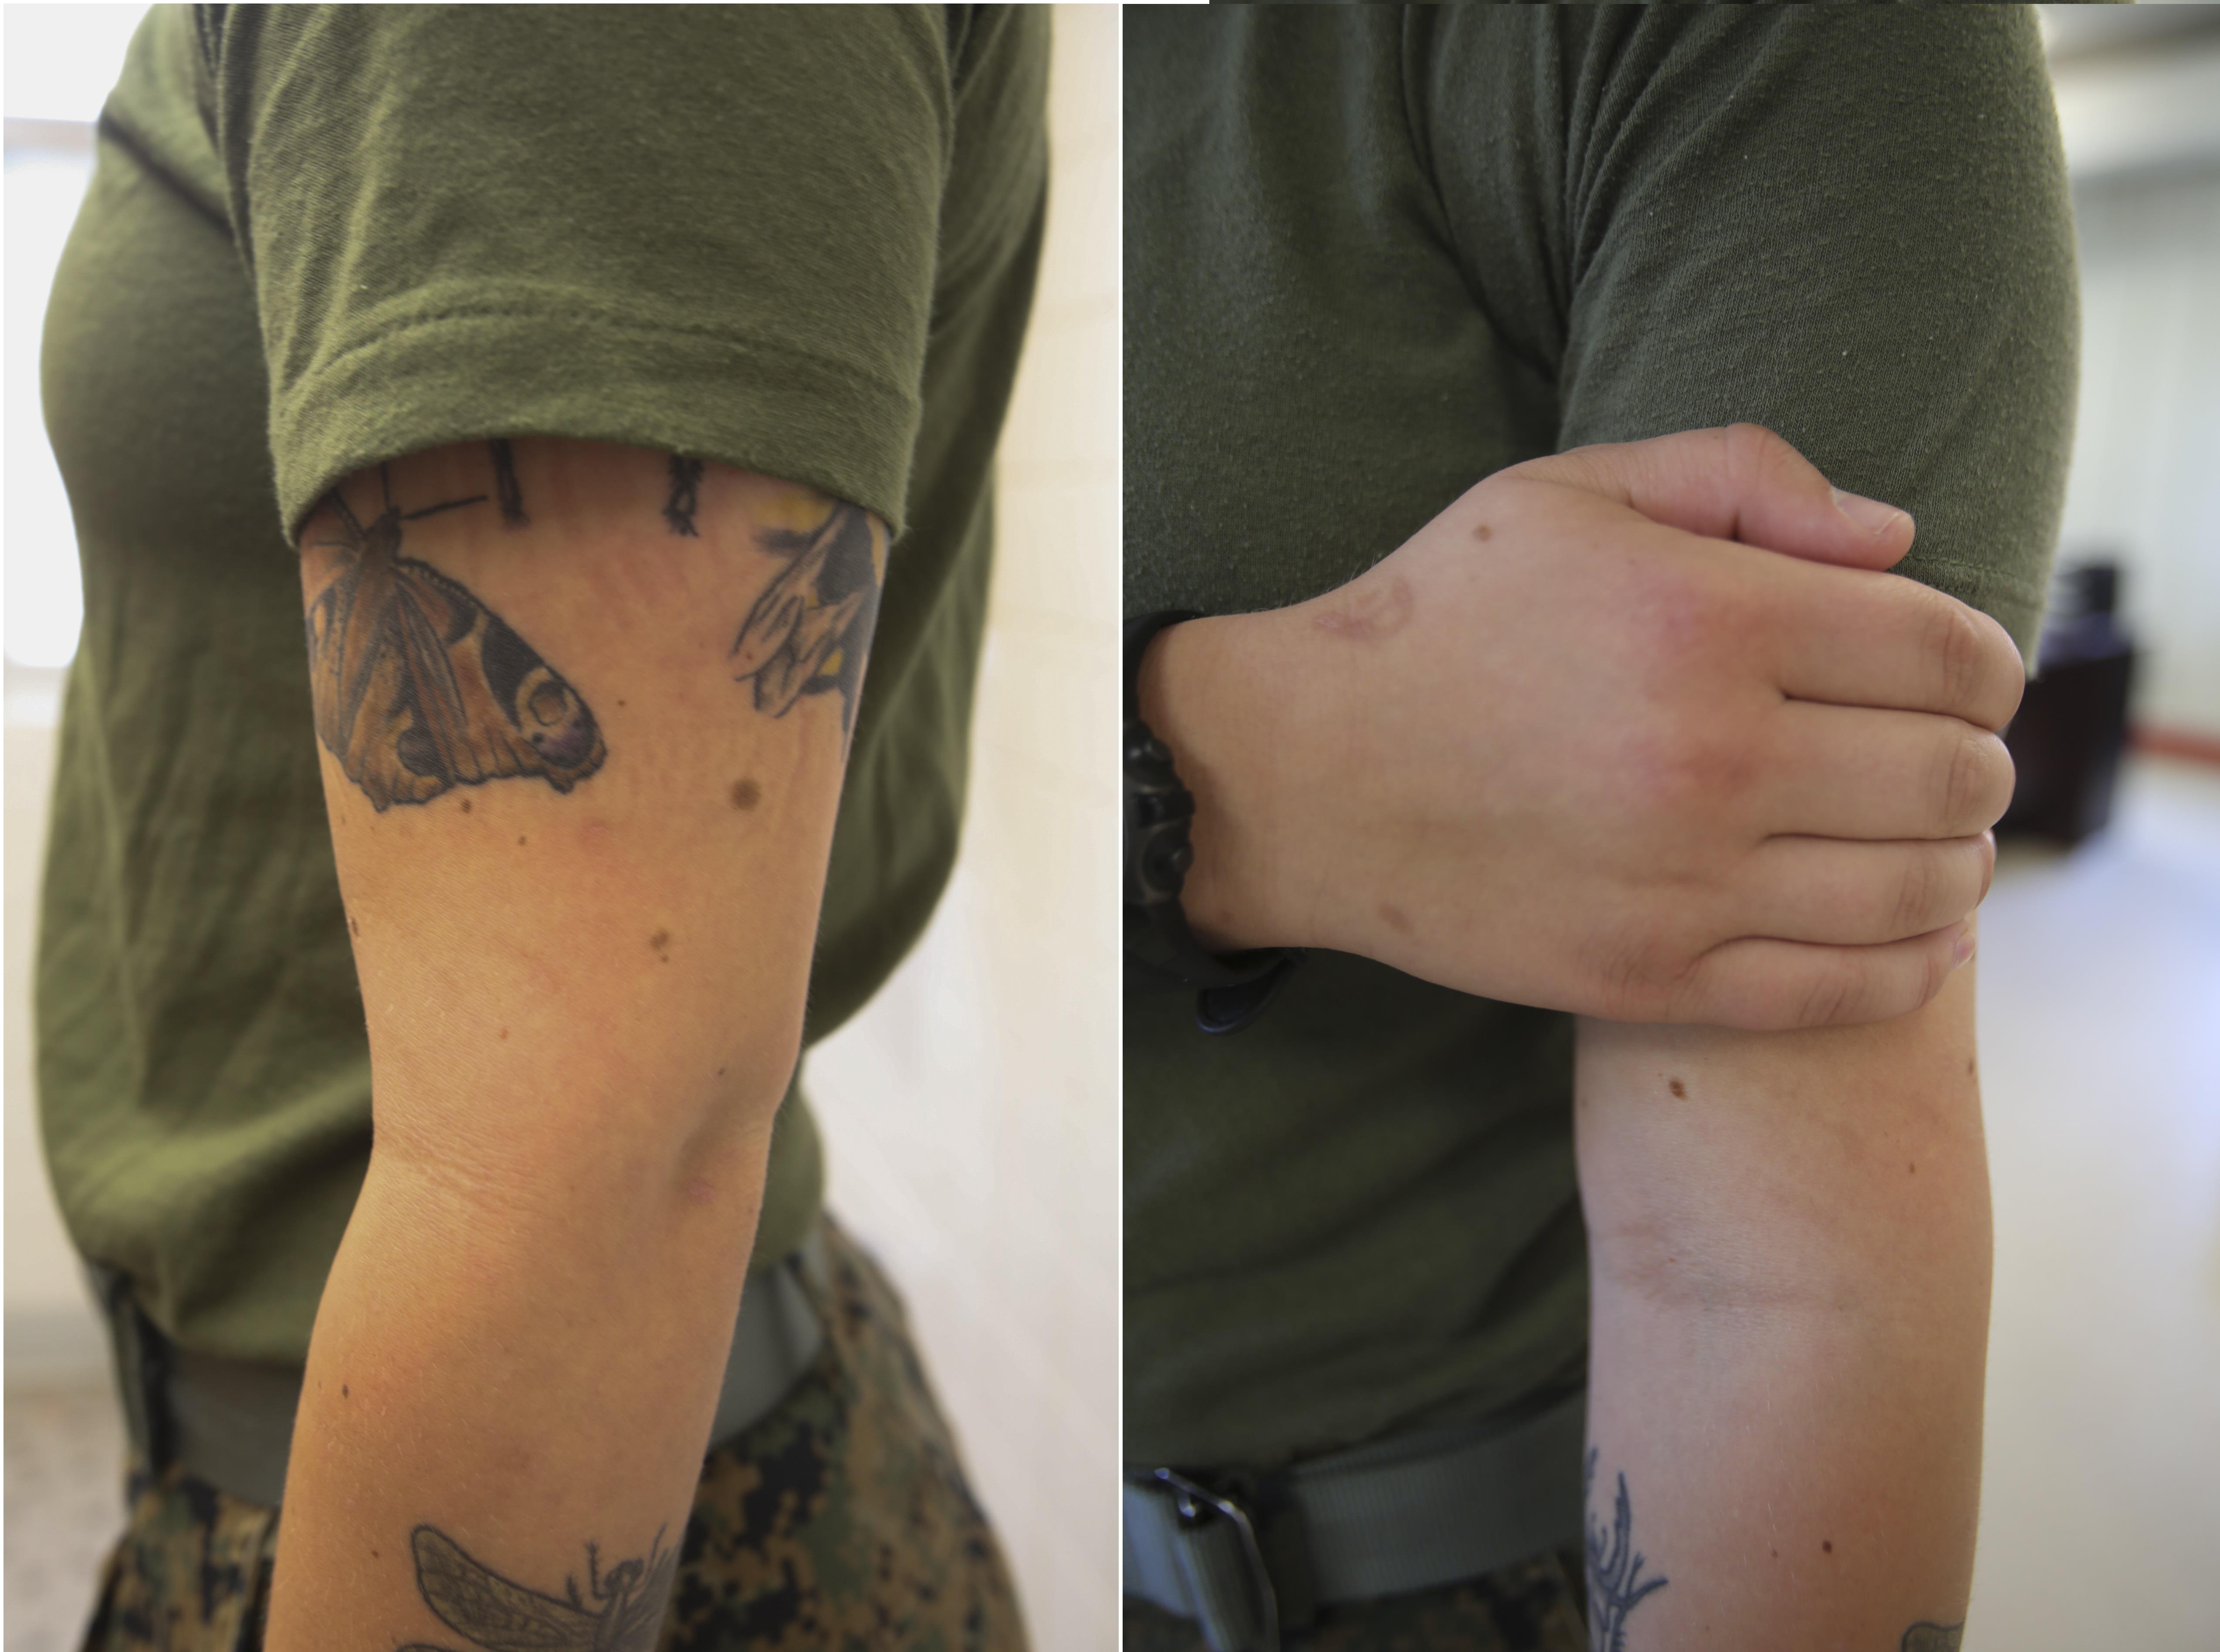 1st marine division tattoo